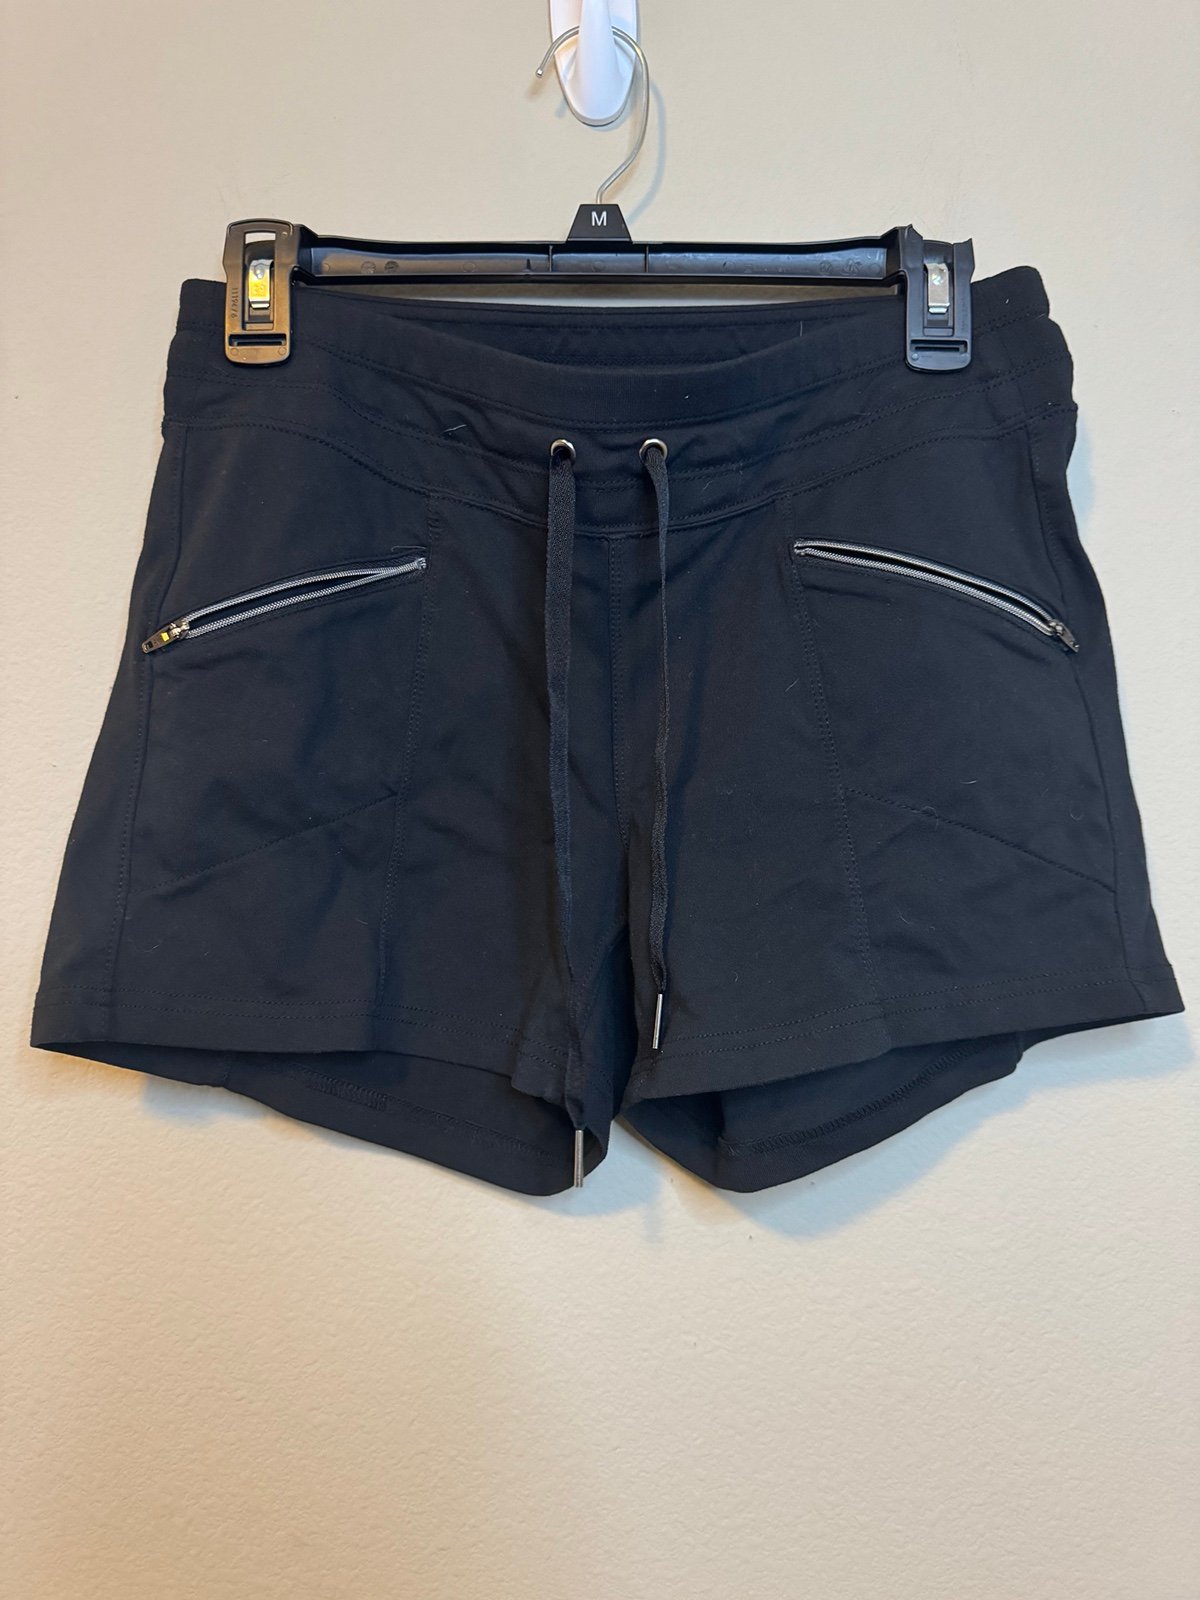 large selection Athleta Black Zipper Pocket Shorts Size Small HeRwtbyCQ Buying Cheap